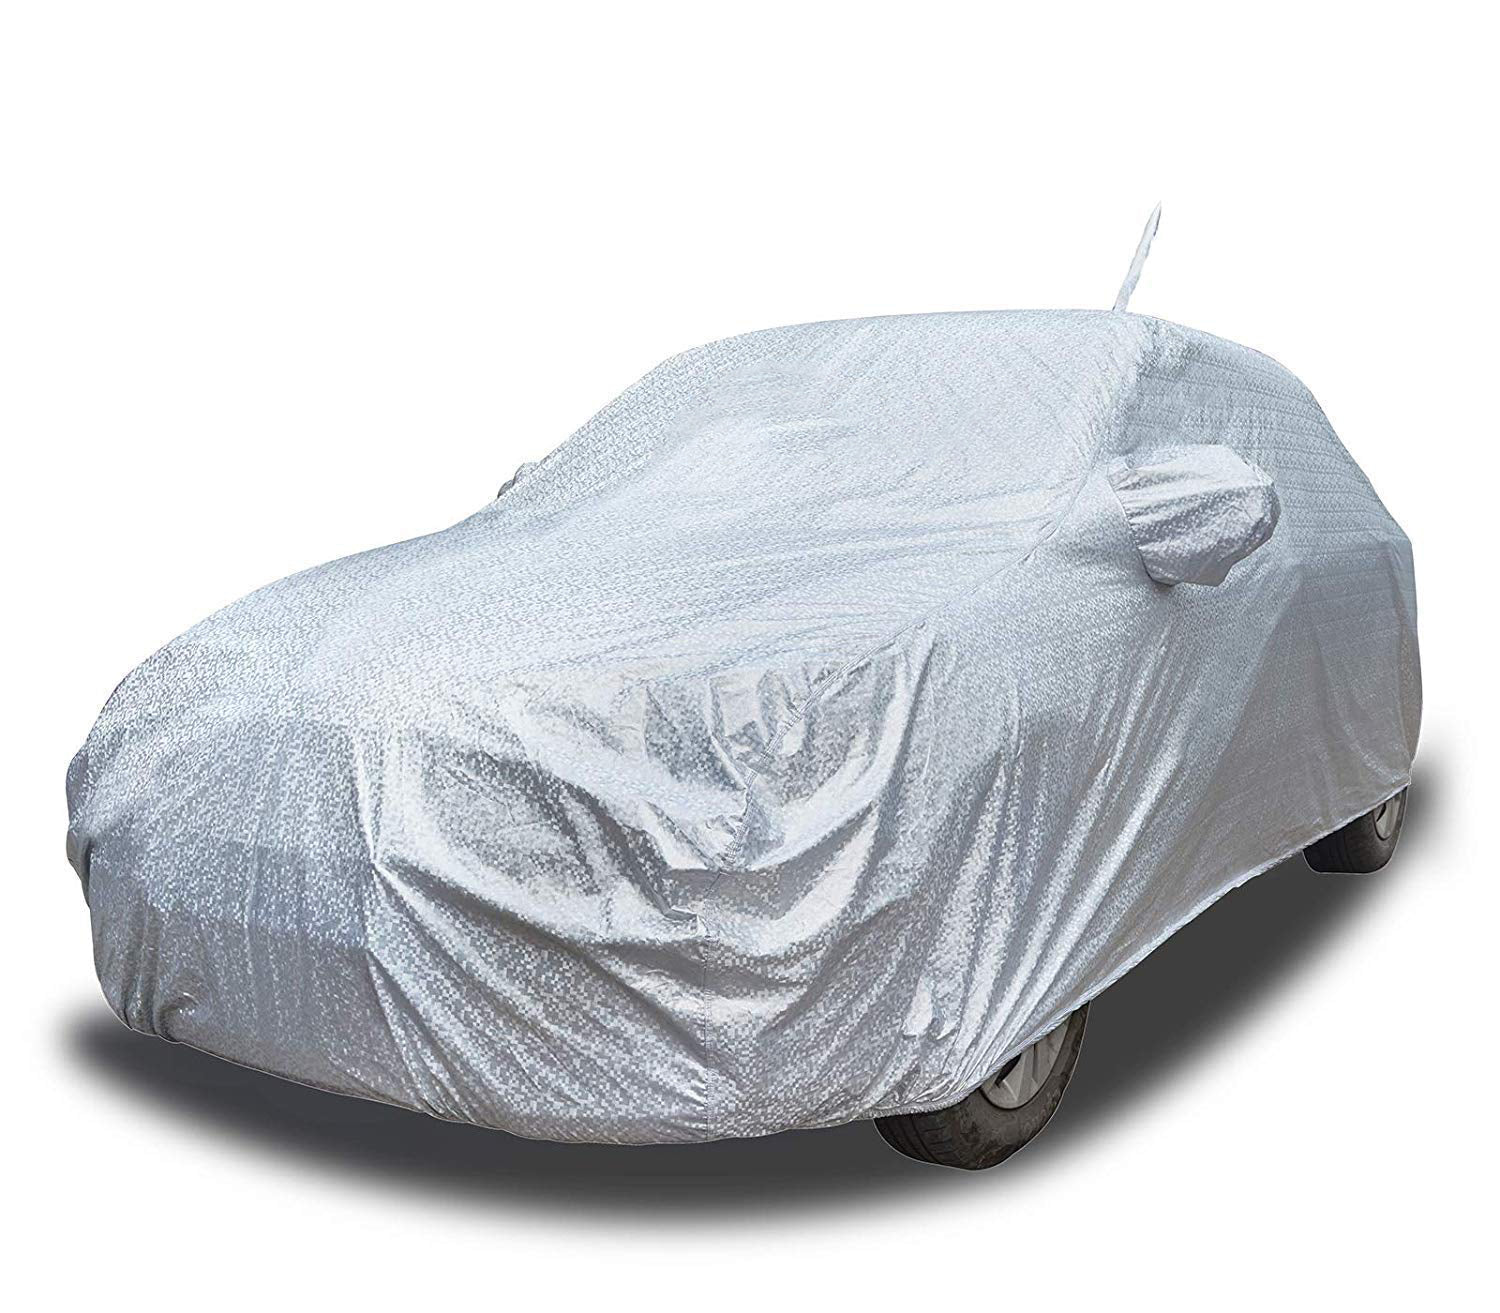 Buy Heavy Duty Chevrolet Spark Car Body Cover online